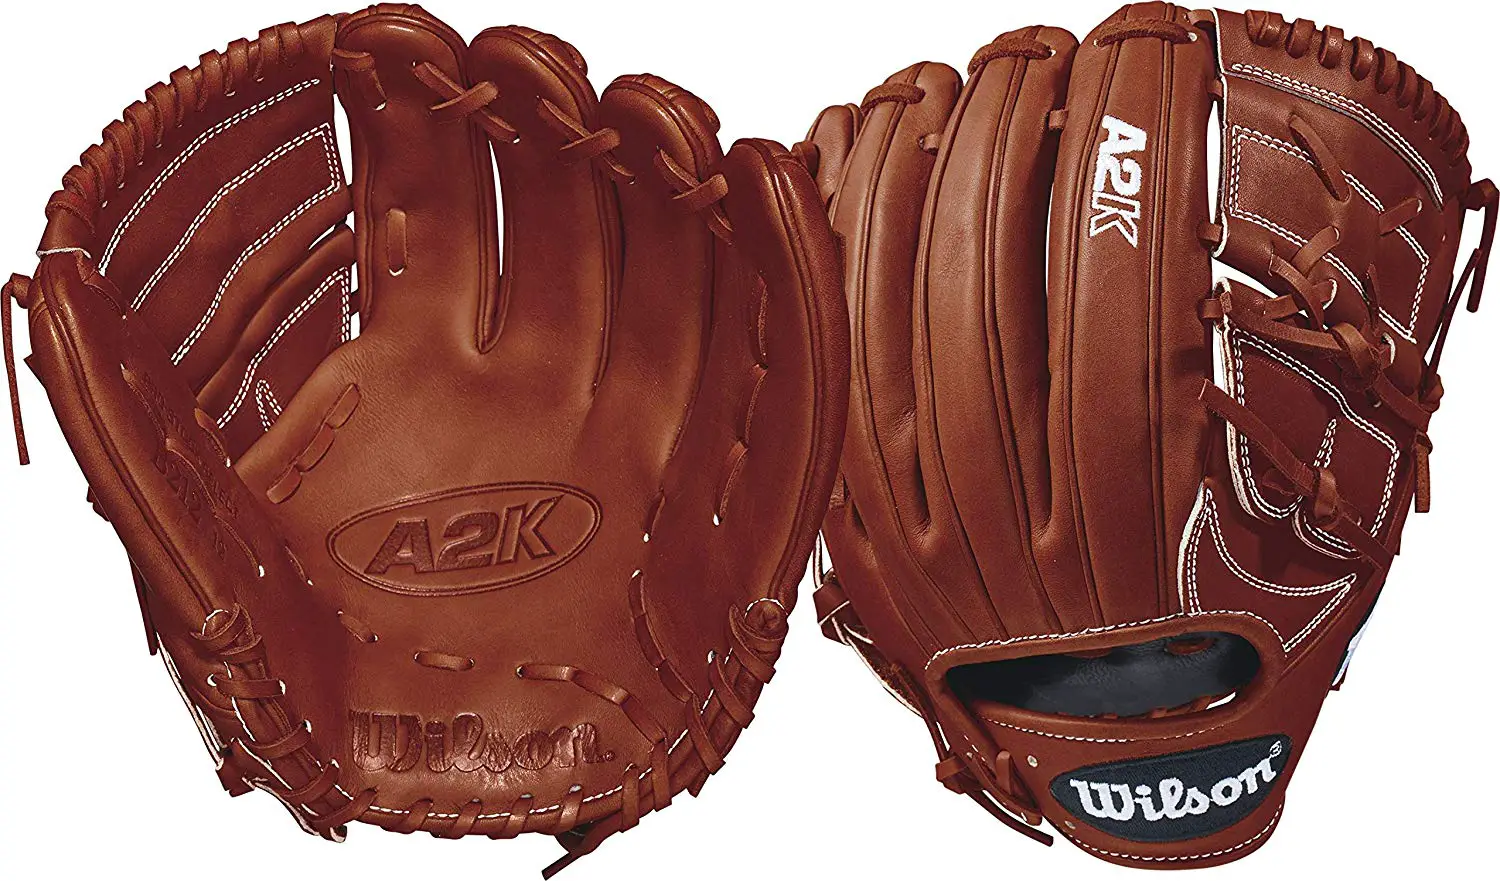 Wilson A2K Baseball Glove Series